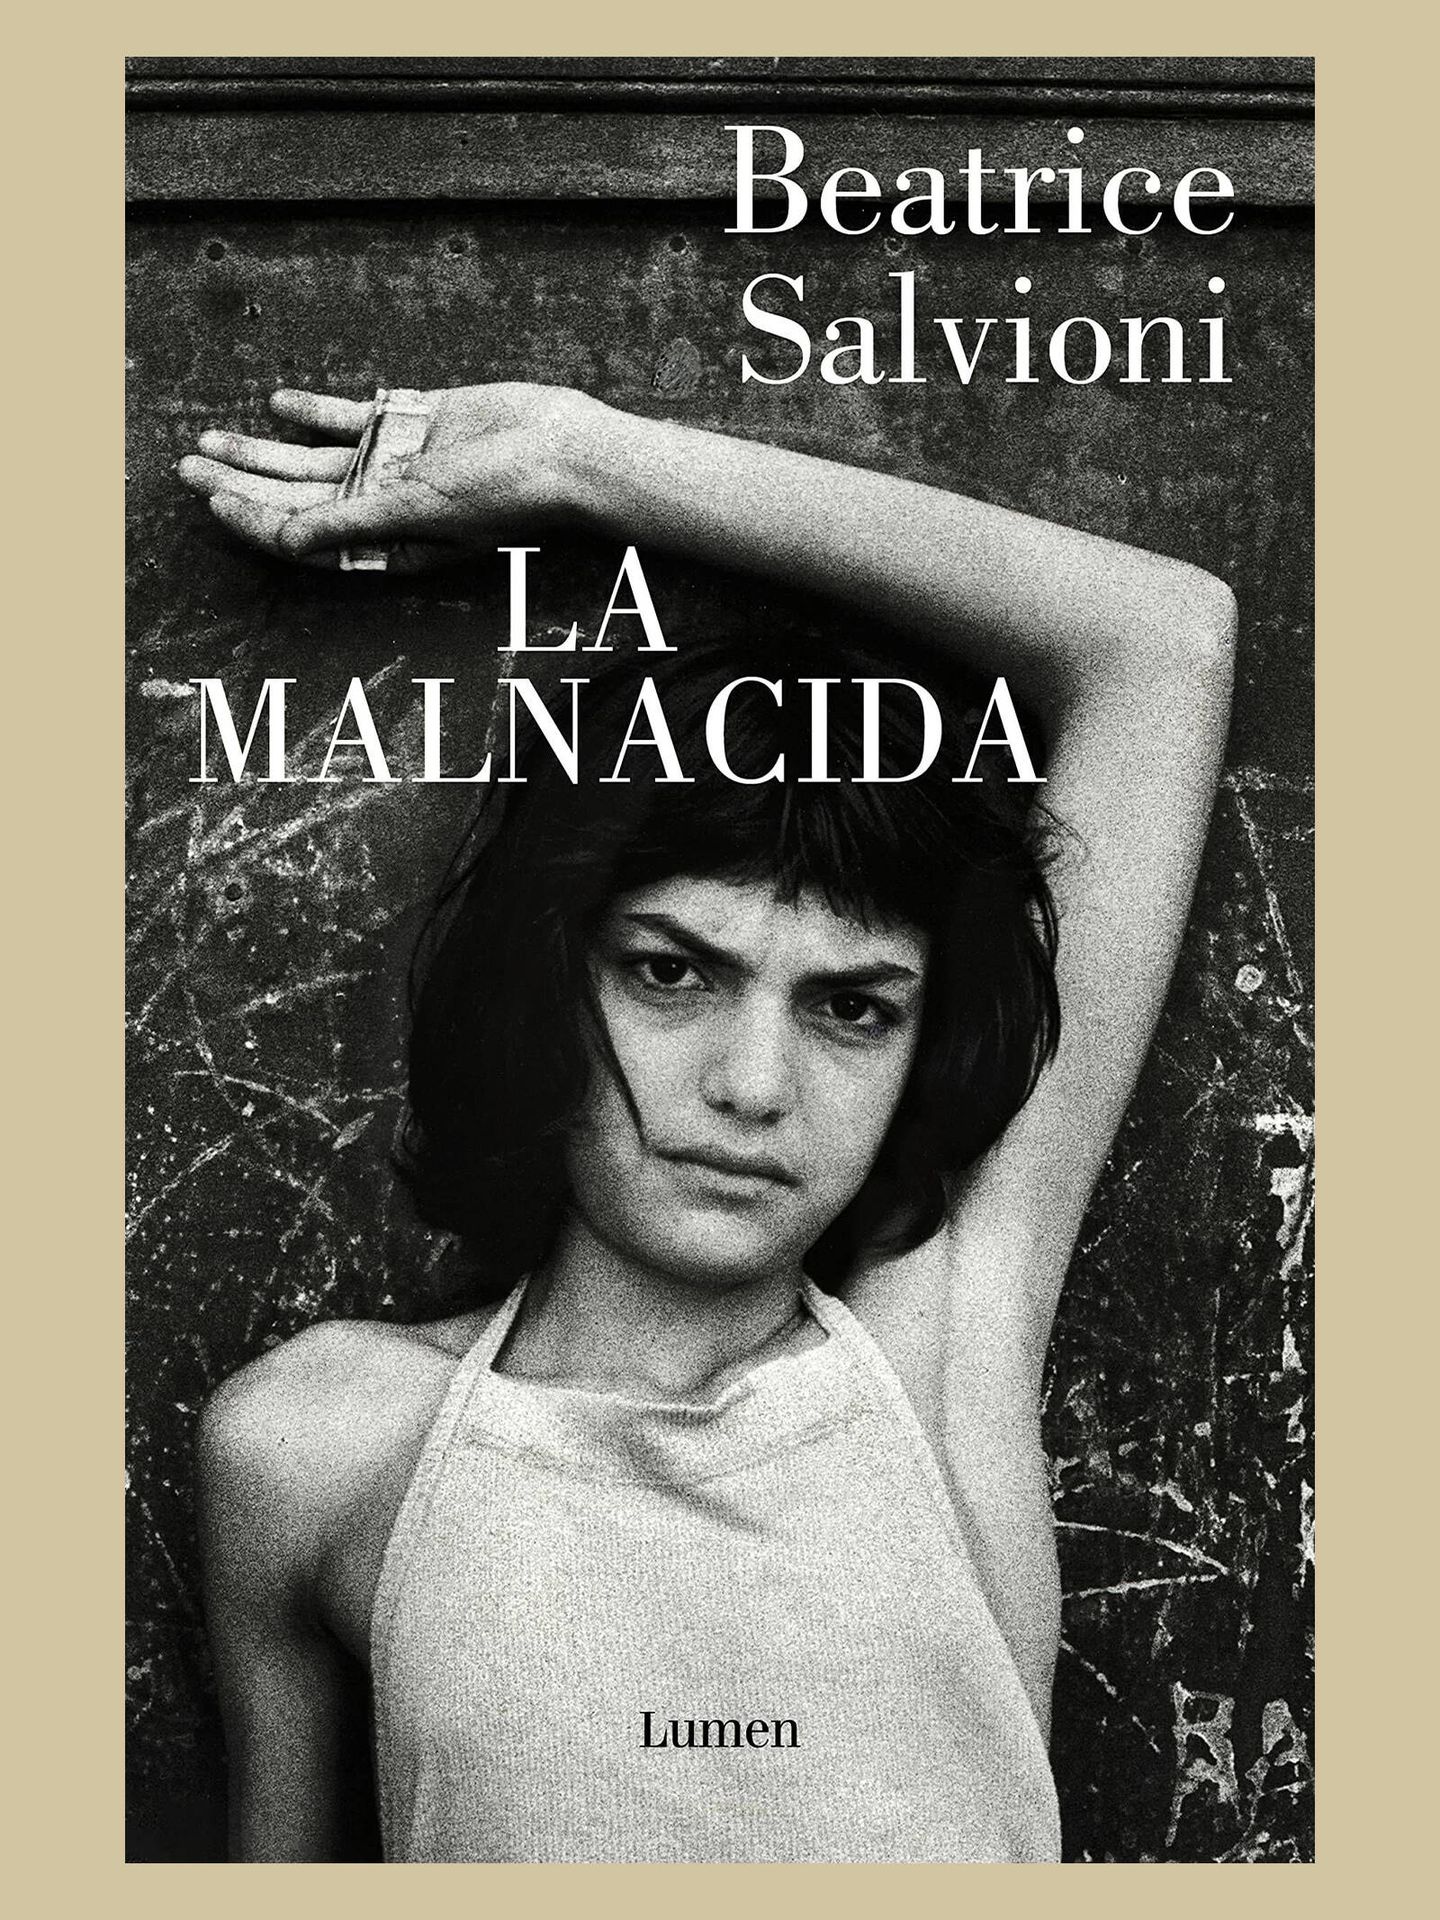 Portada de 'La Malnacida', ópera prima de Beatrice Salvioni.